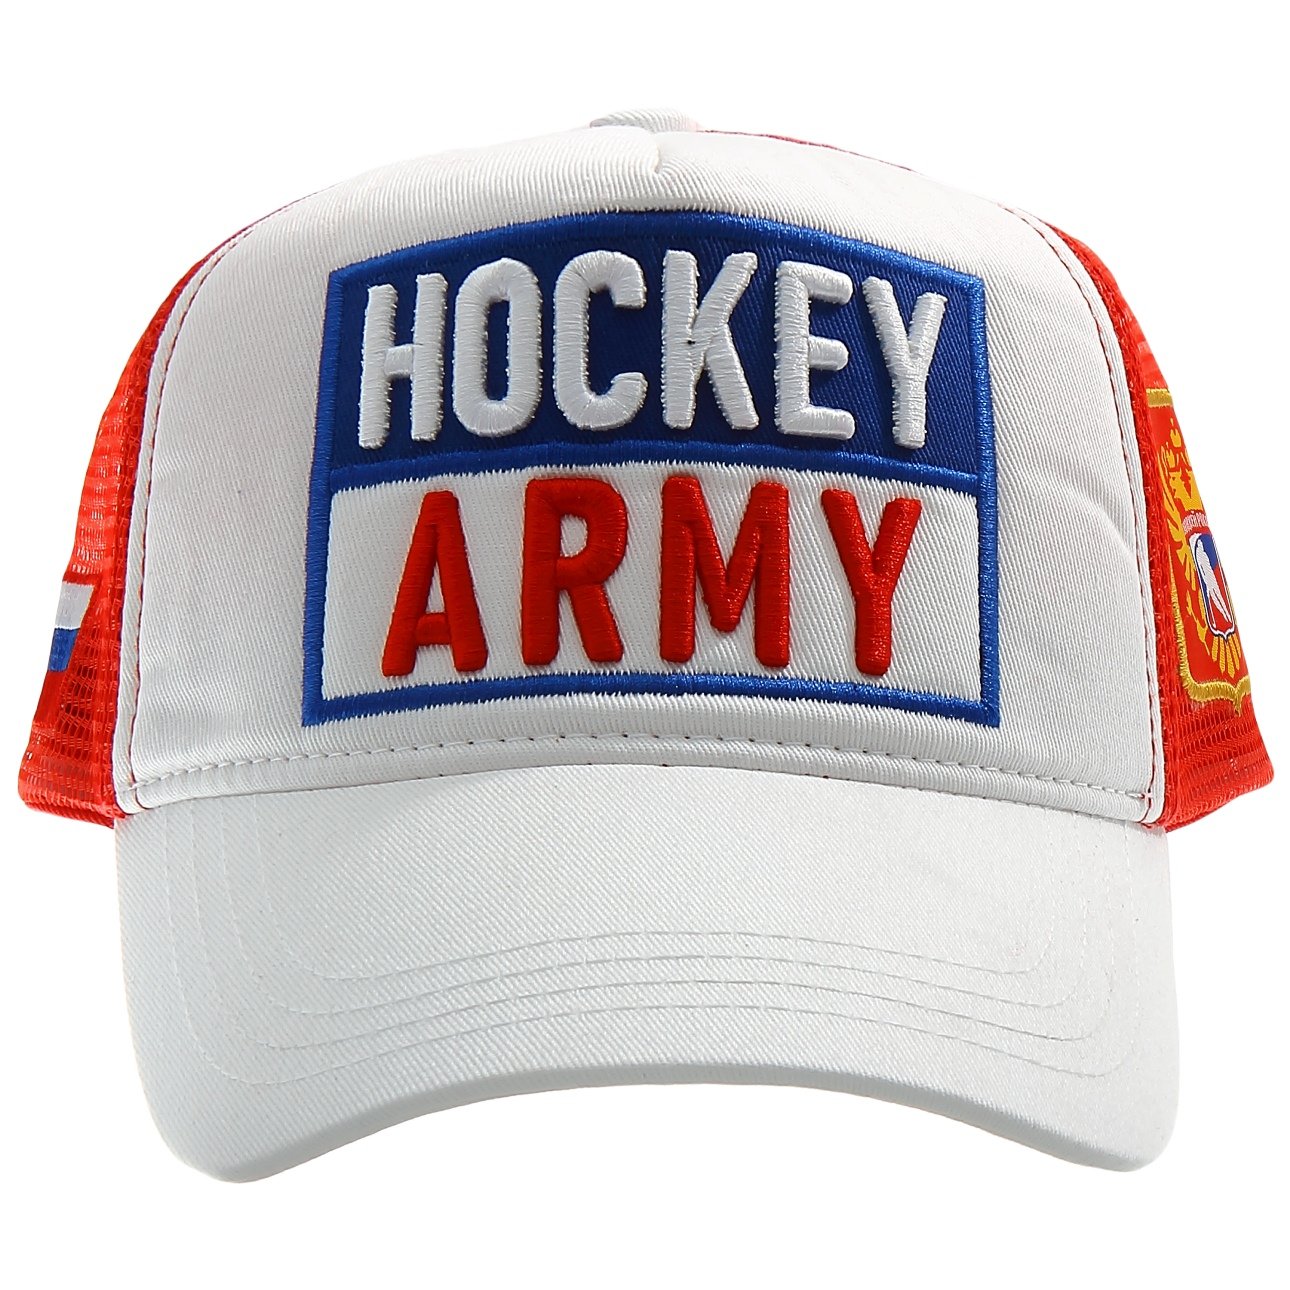 Бейсболка "Hockey Army" красно-белая